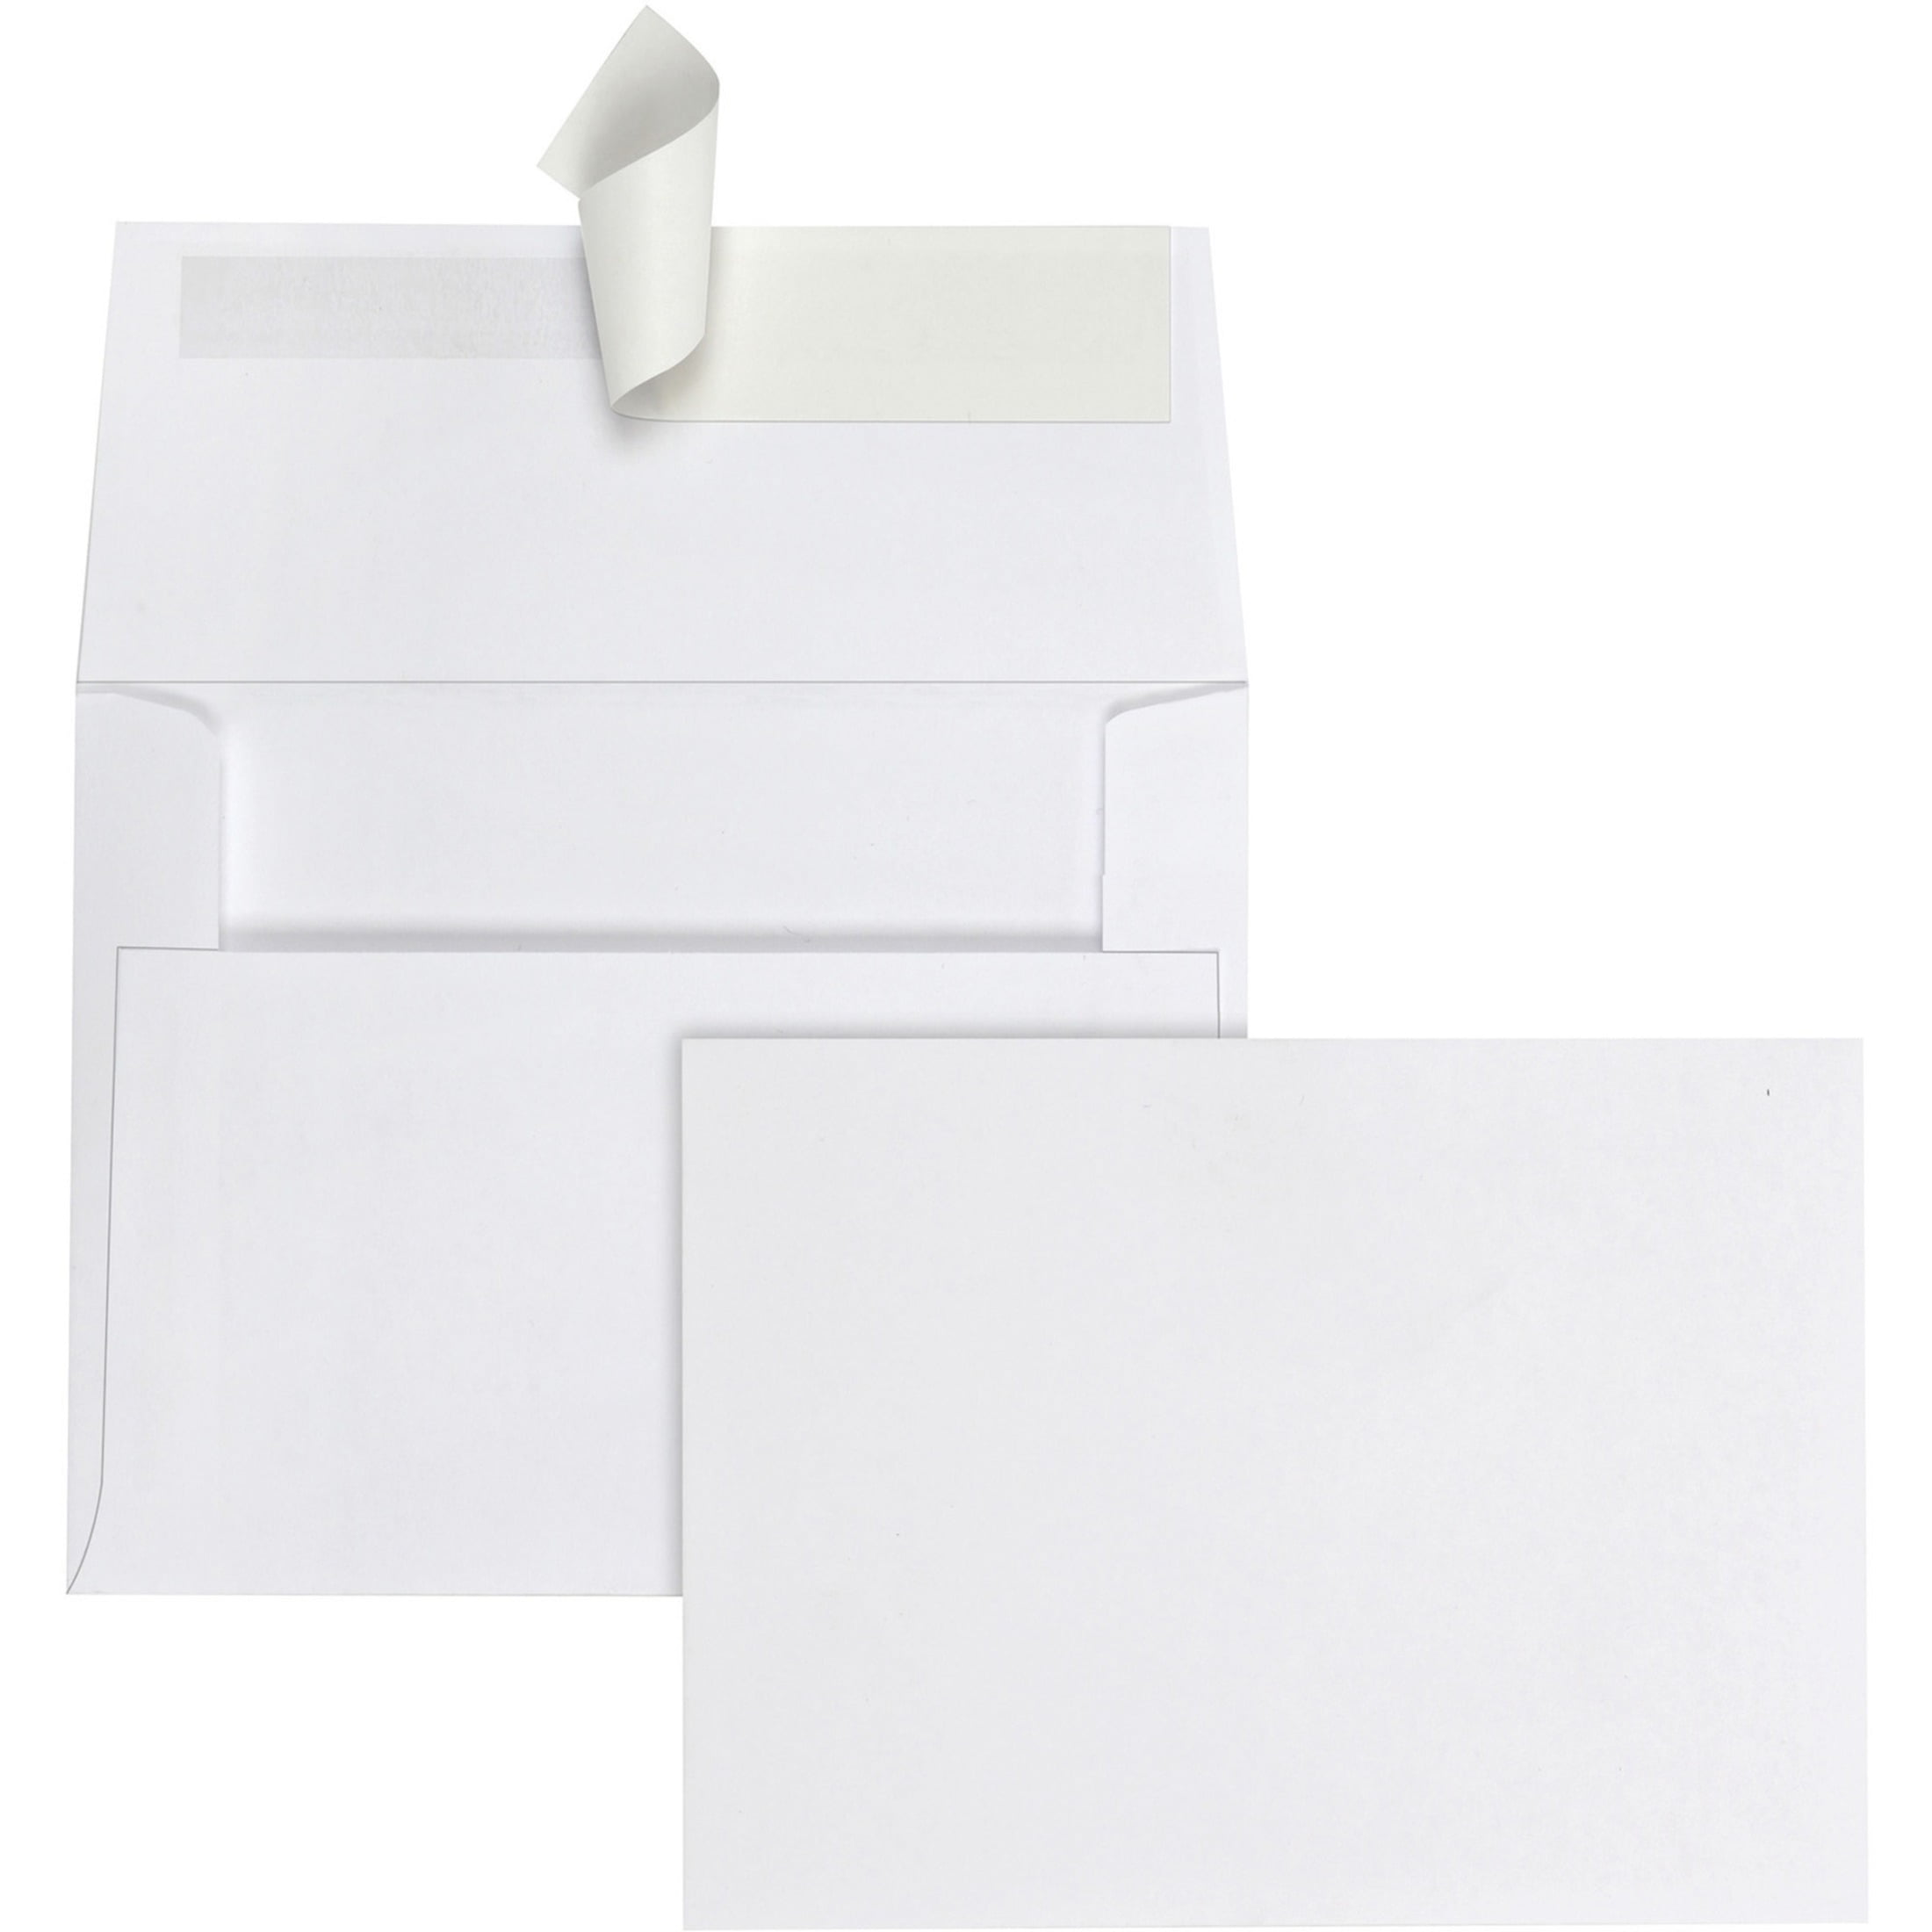 Envelope 100 Envelopes Cream/Off White 4 3/8 x 5 3/4 for Greeting Cards Invitations